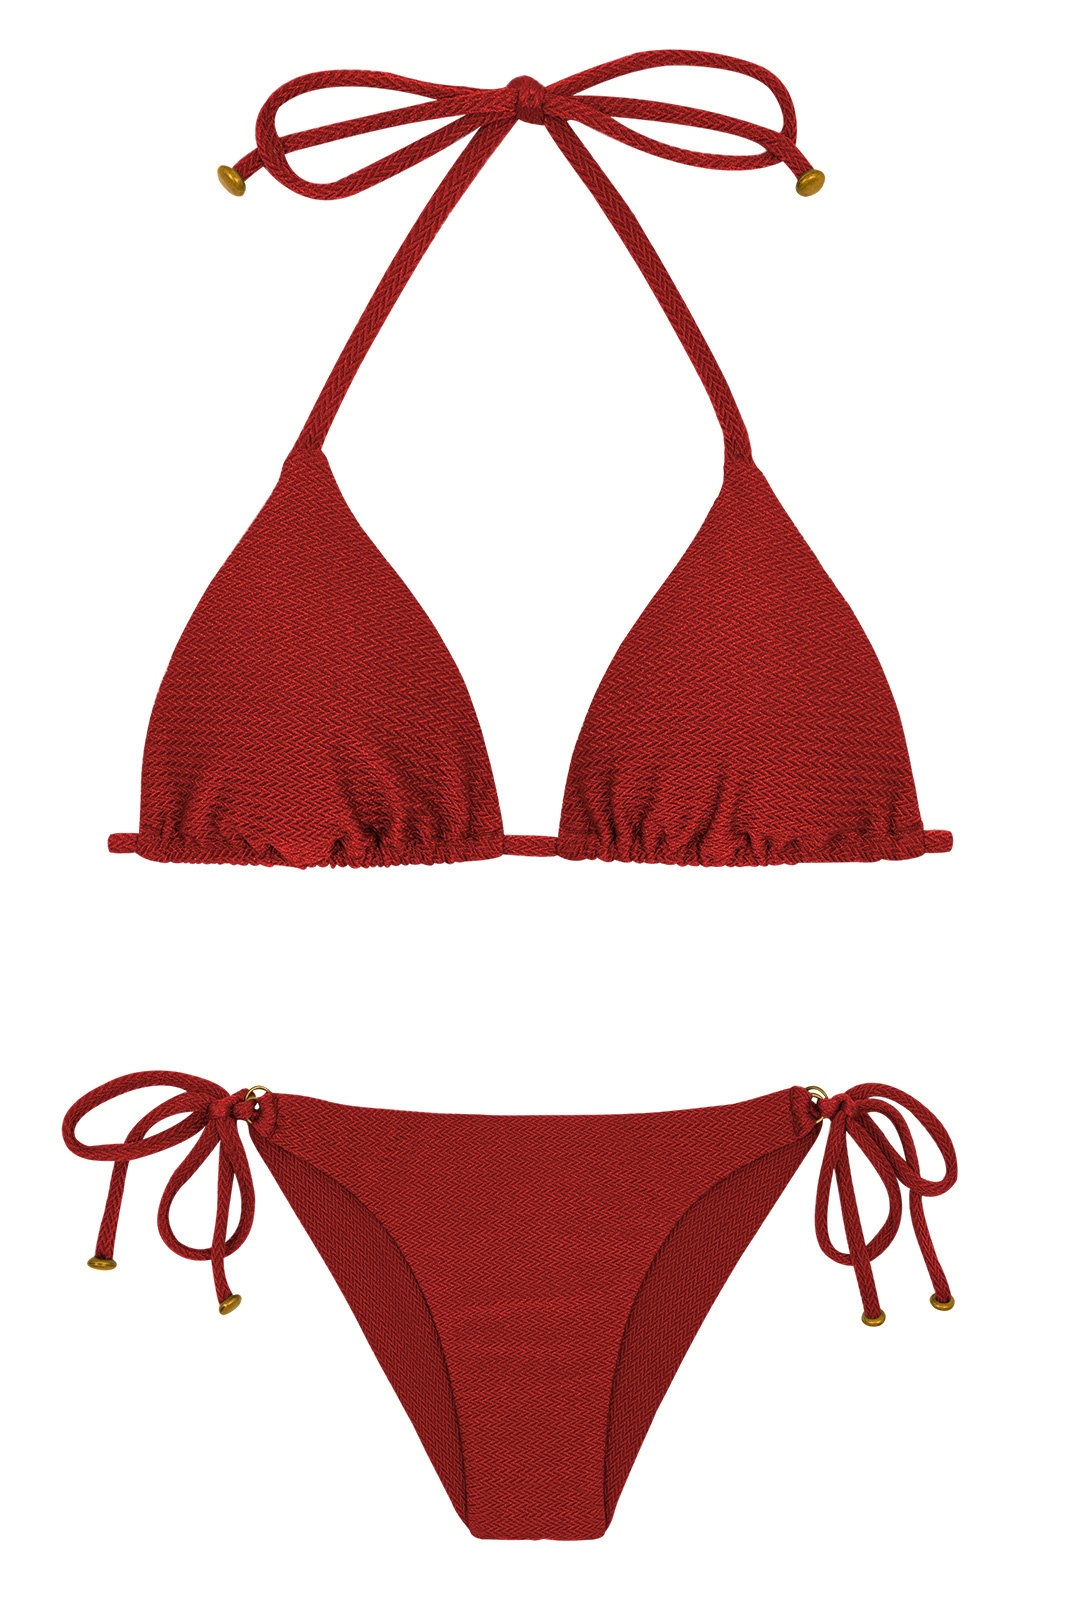 Textured Triangle Deep Red Bikini With Golden Details Duna Tri Divino 1871